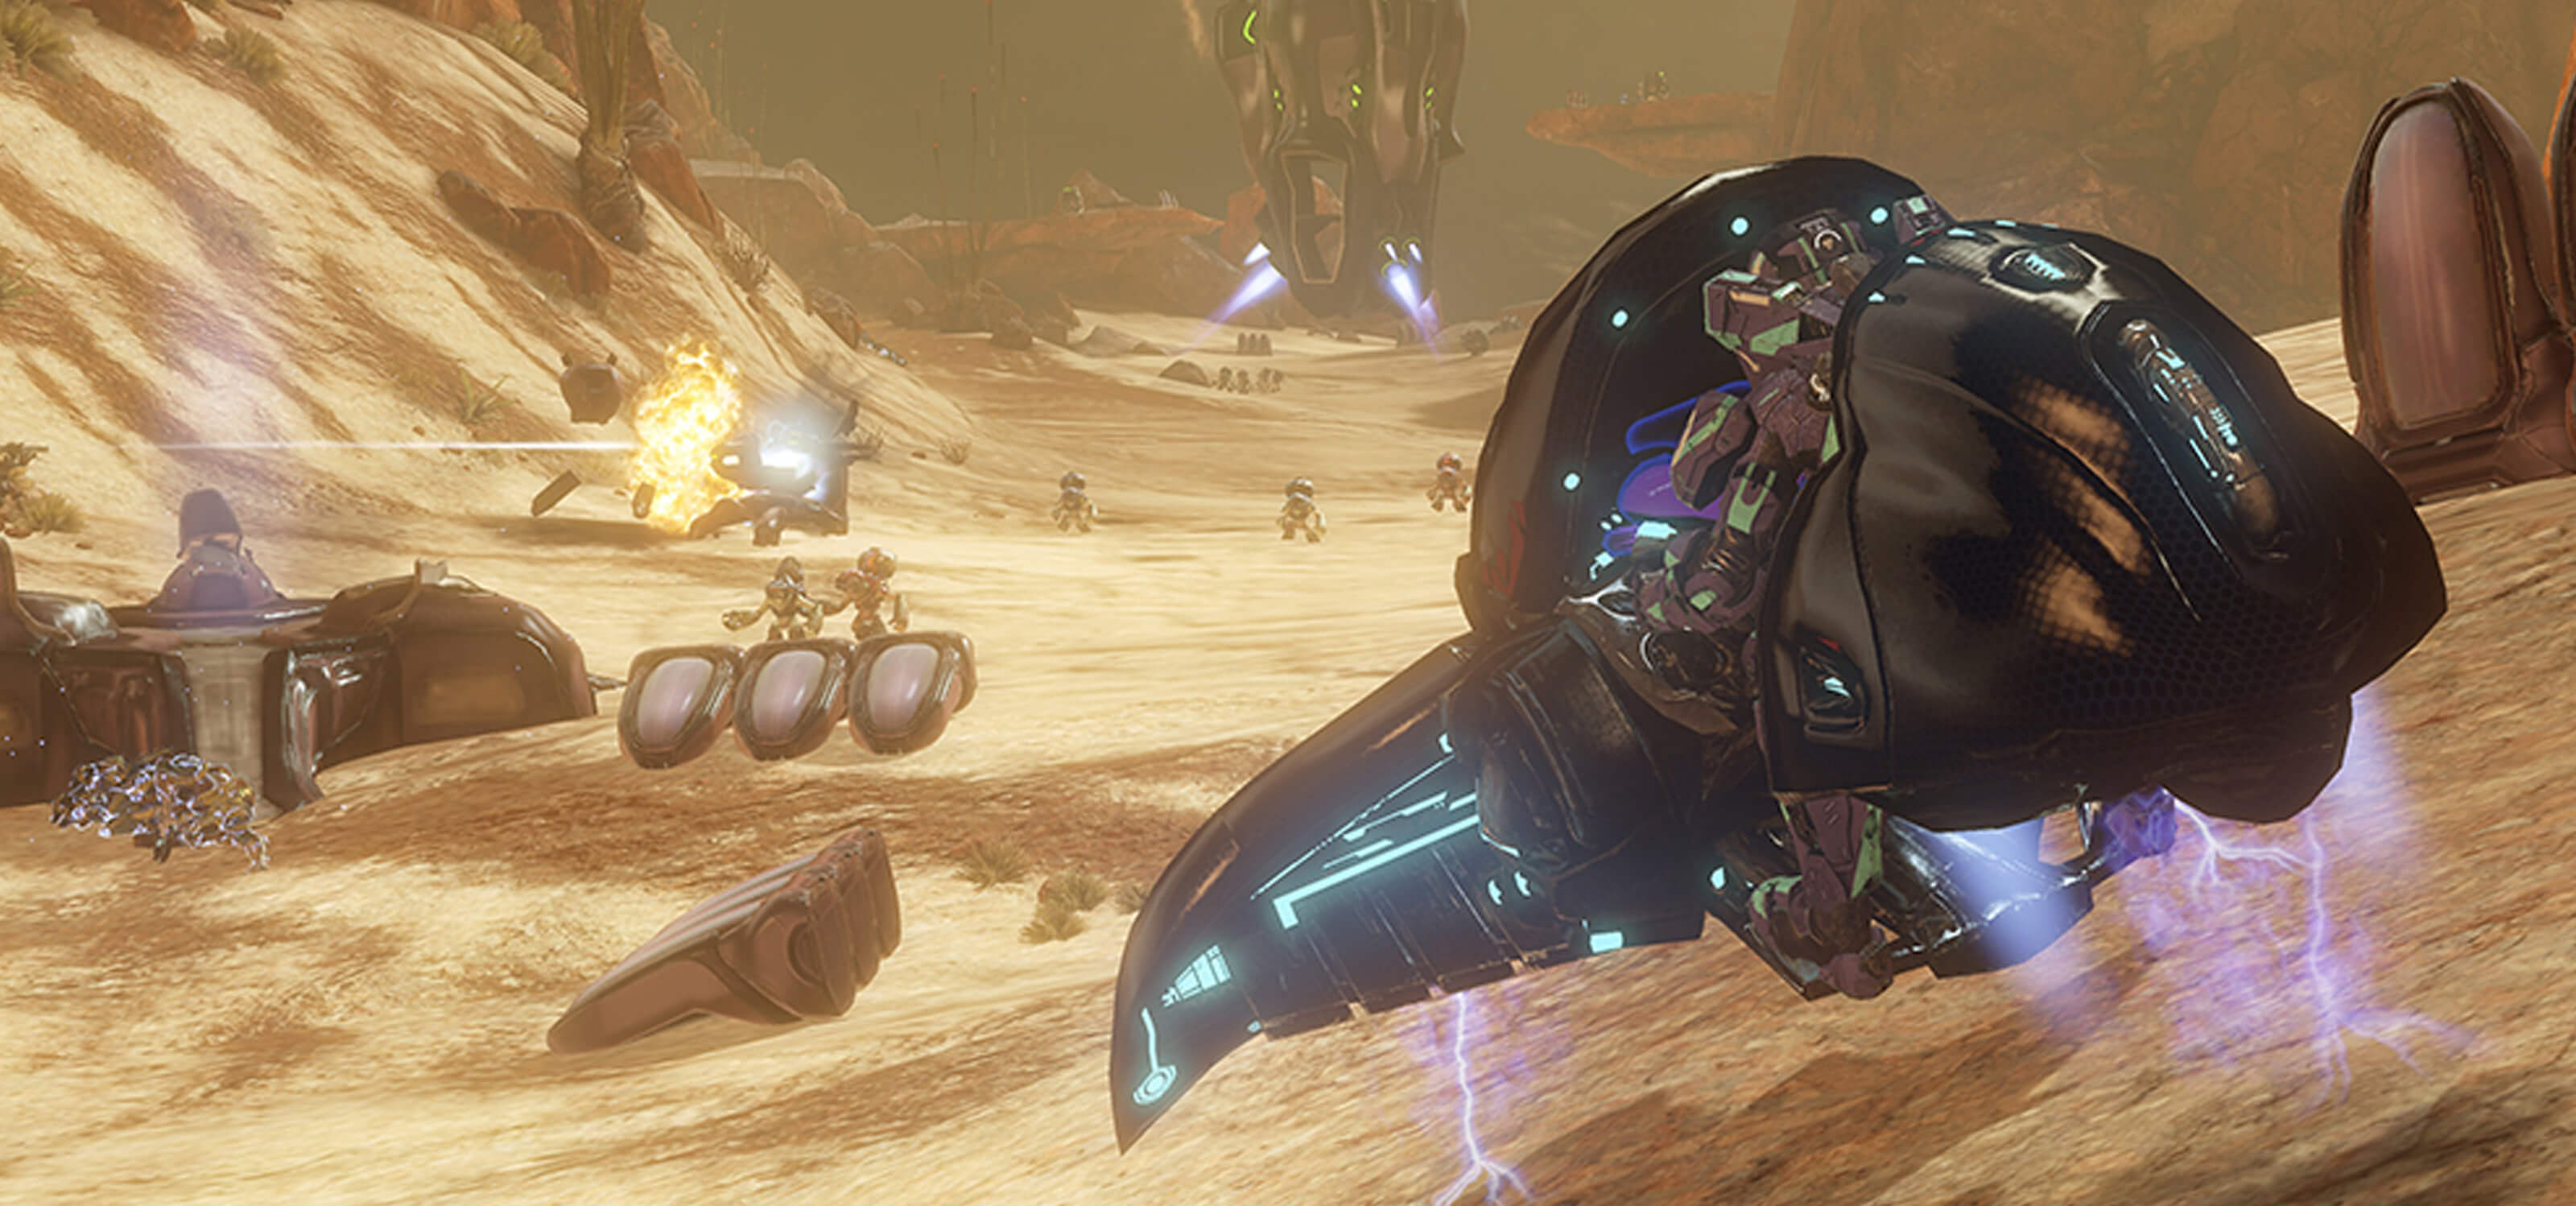 Screenshot from Halo 4 of futuristic machines flying through a mountainous desert